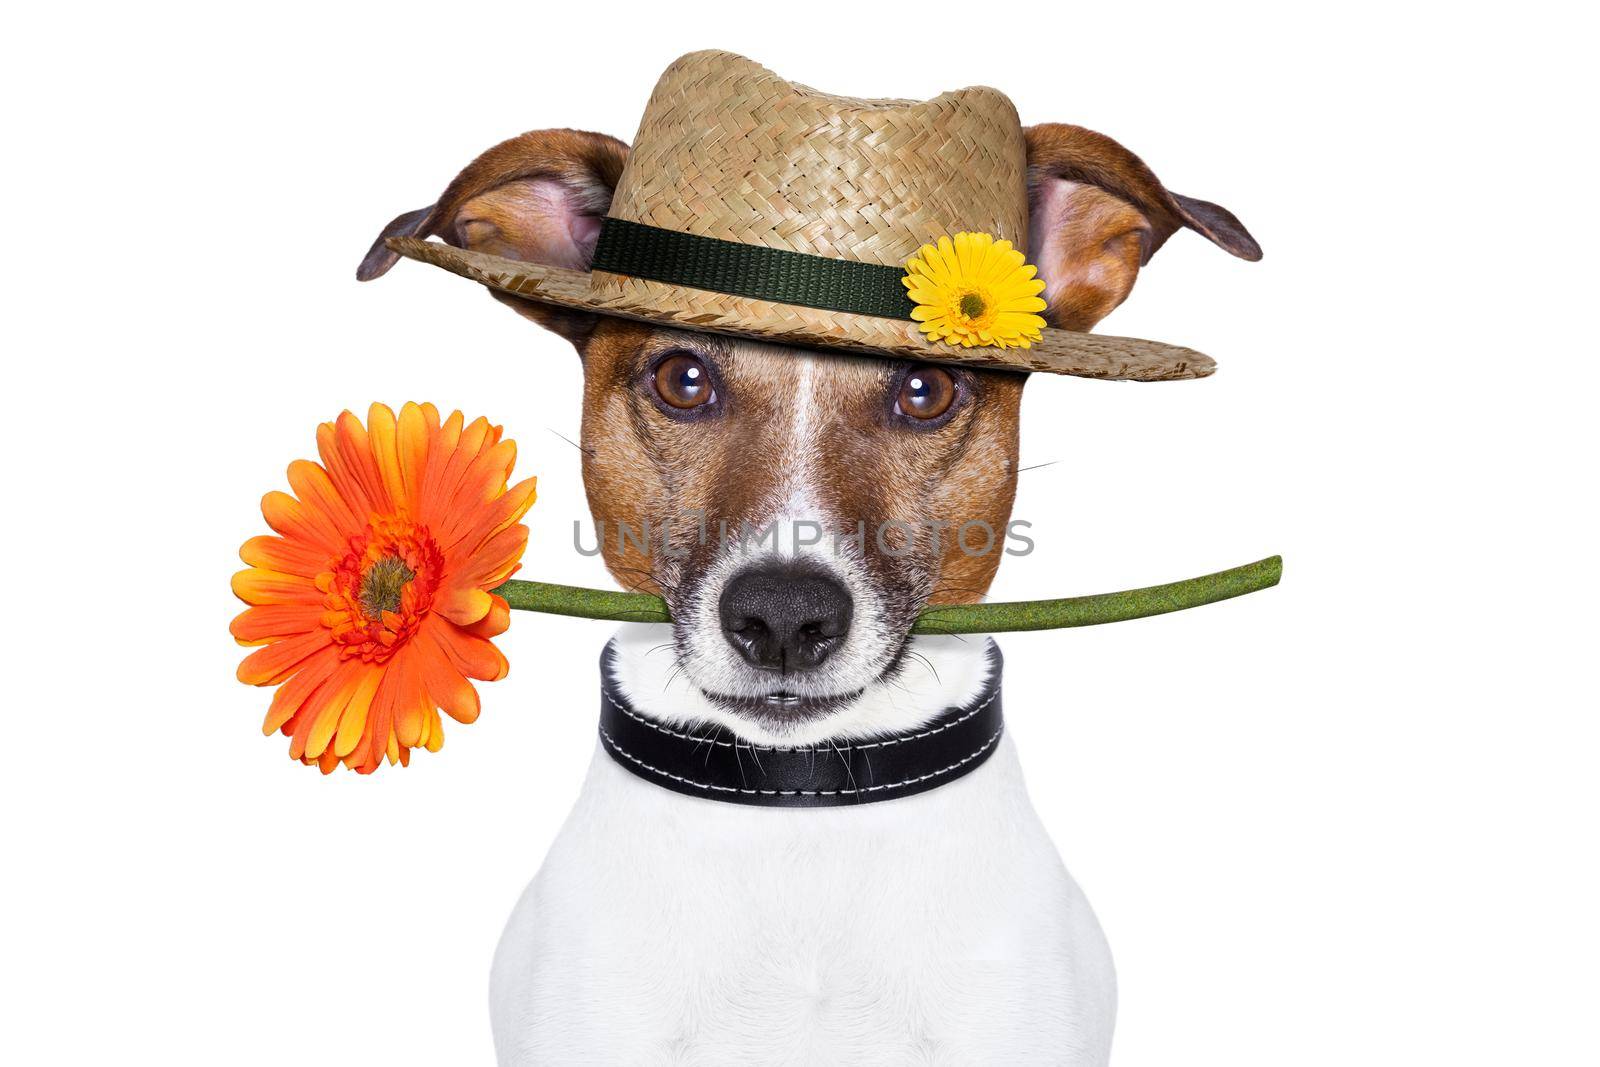  flower dog with hat by Brosch